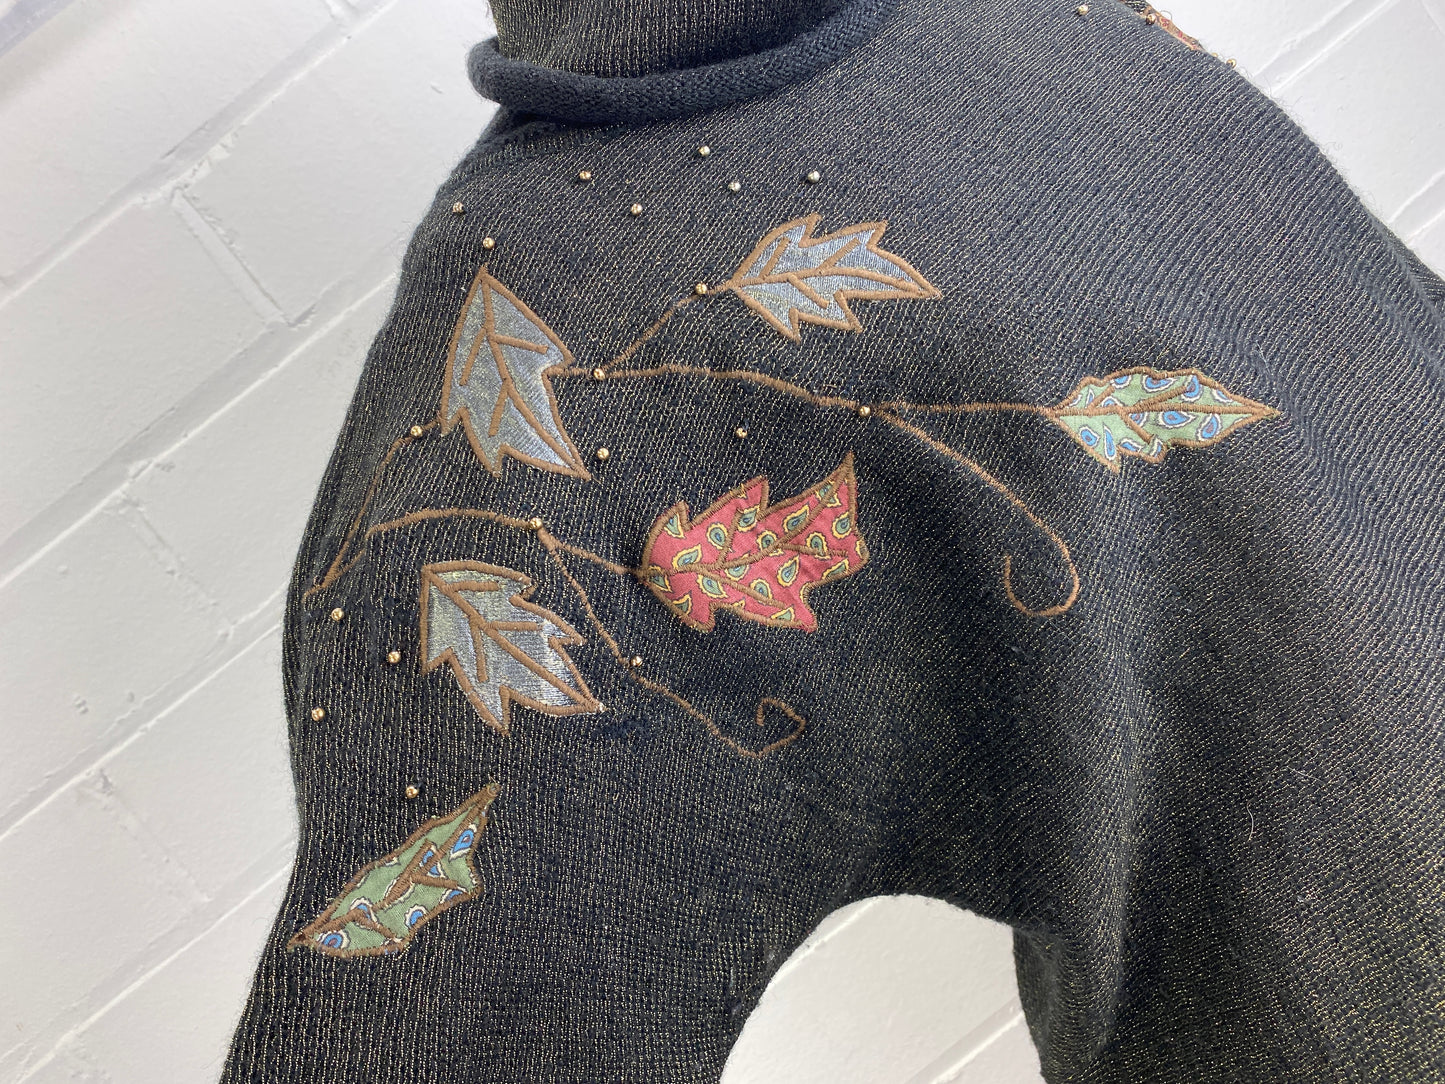 Vintage 1980s Black & Gold Cowl Neck Sweater with Leaf Appliqué, Medium 